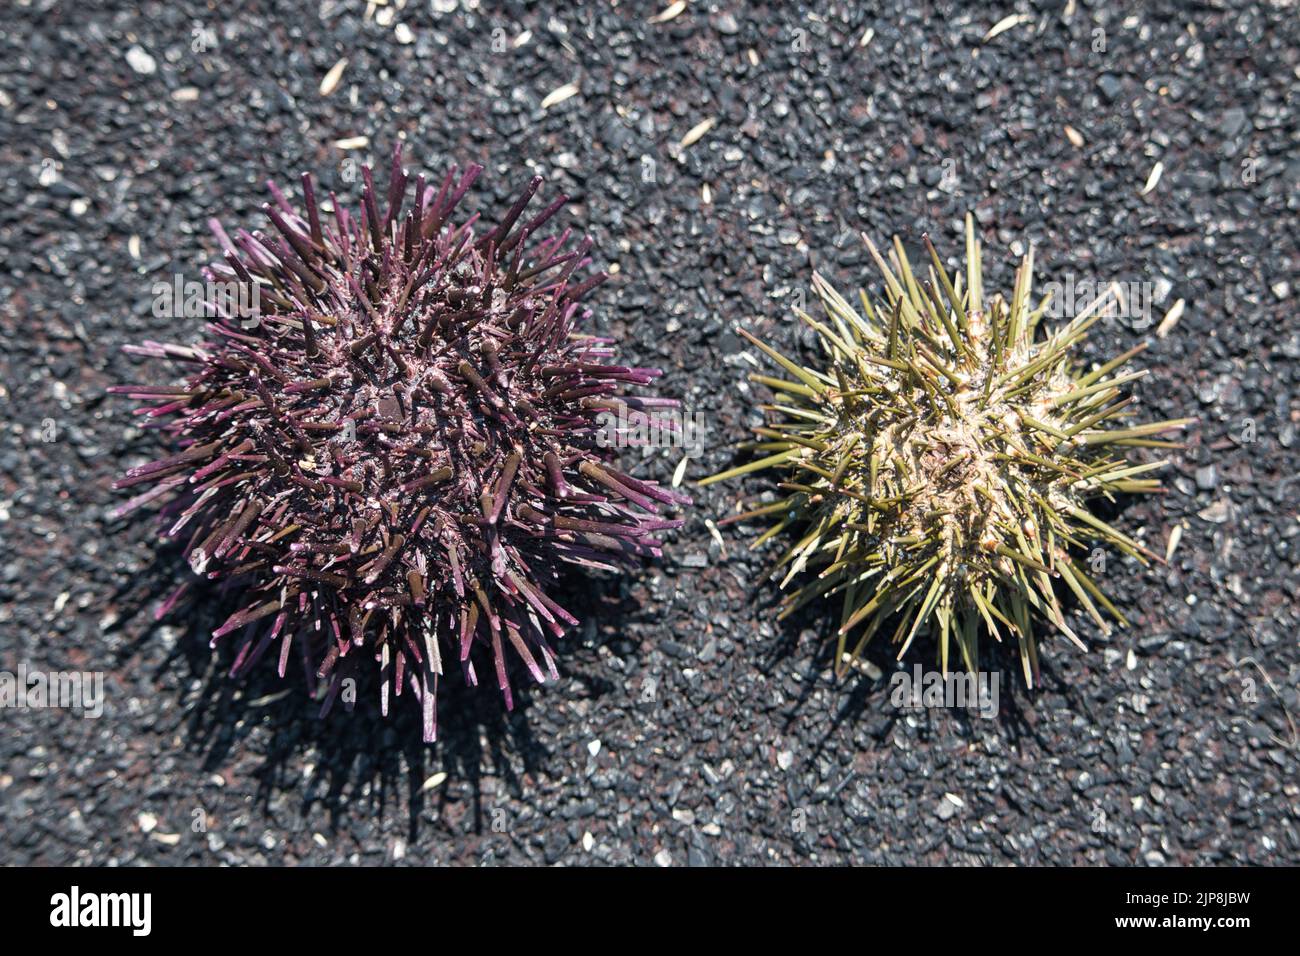 Sea urchin shells on black asphalt background Stock Photo